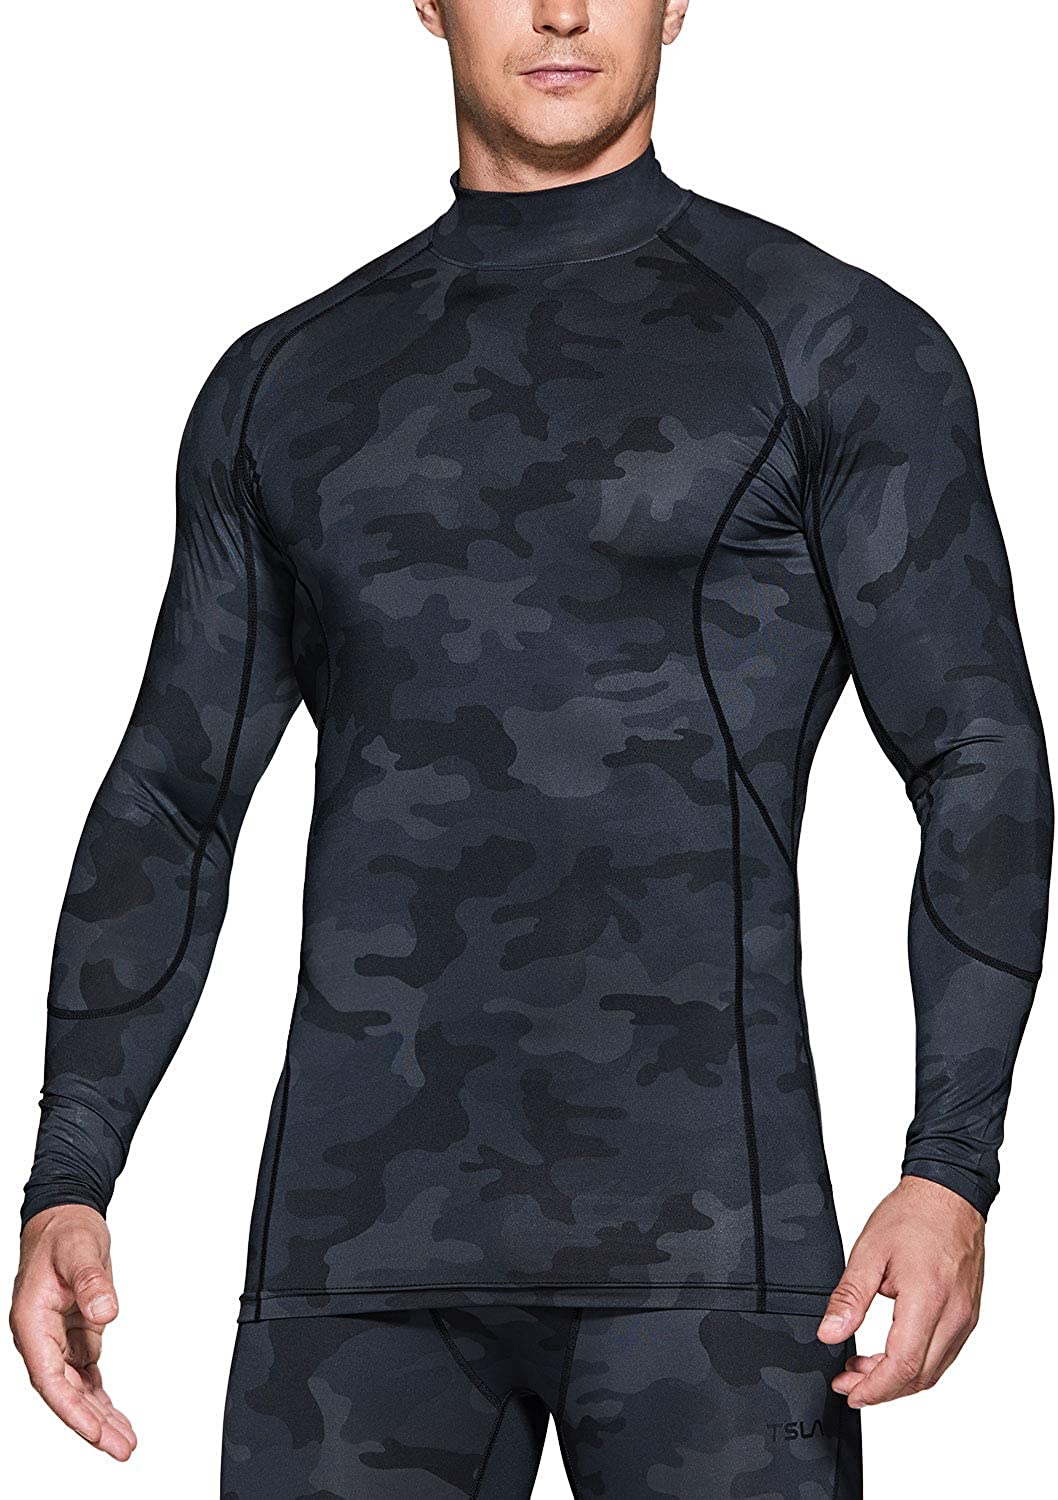 TSLA Compression Shirt Men Base Layer Long Sleeve Workout T-Shirt Clothes Men